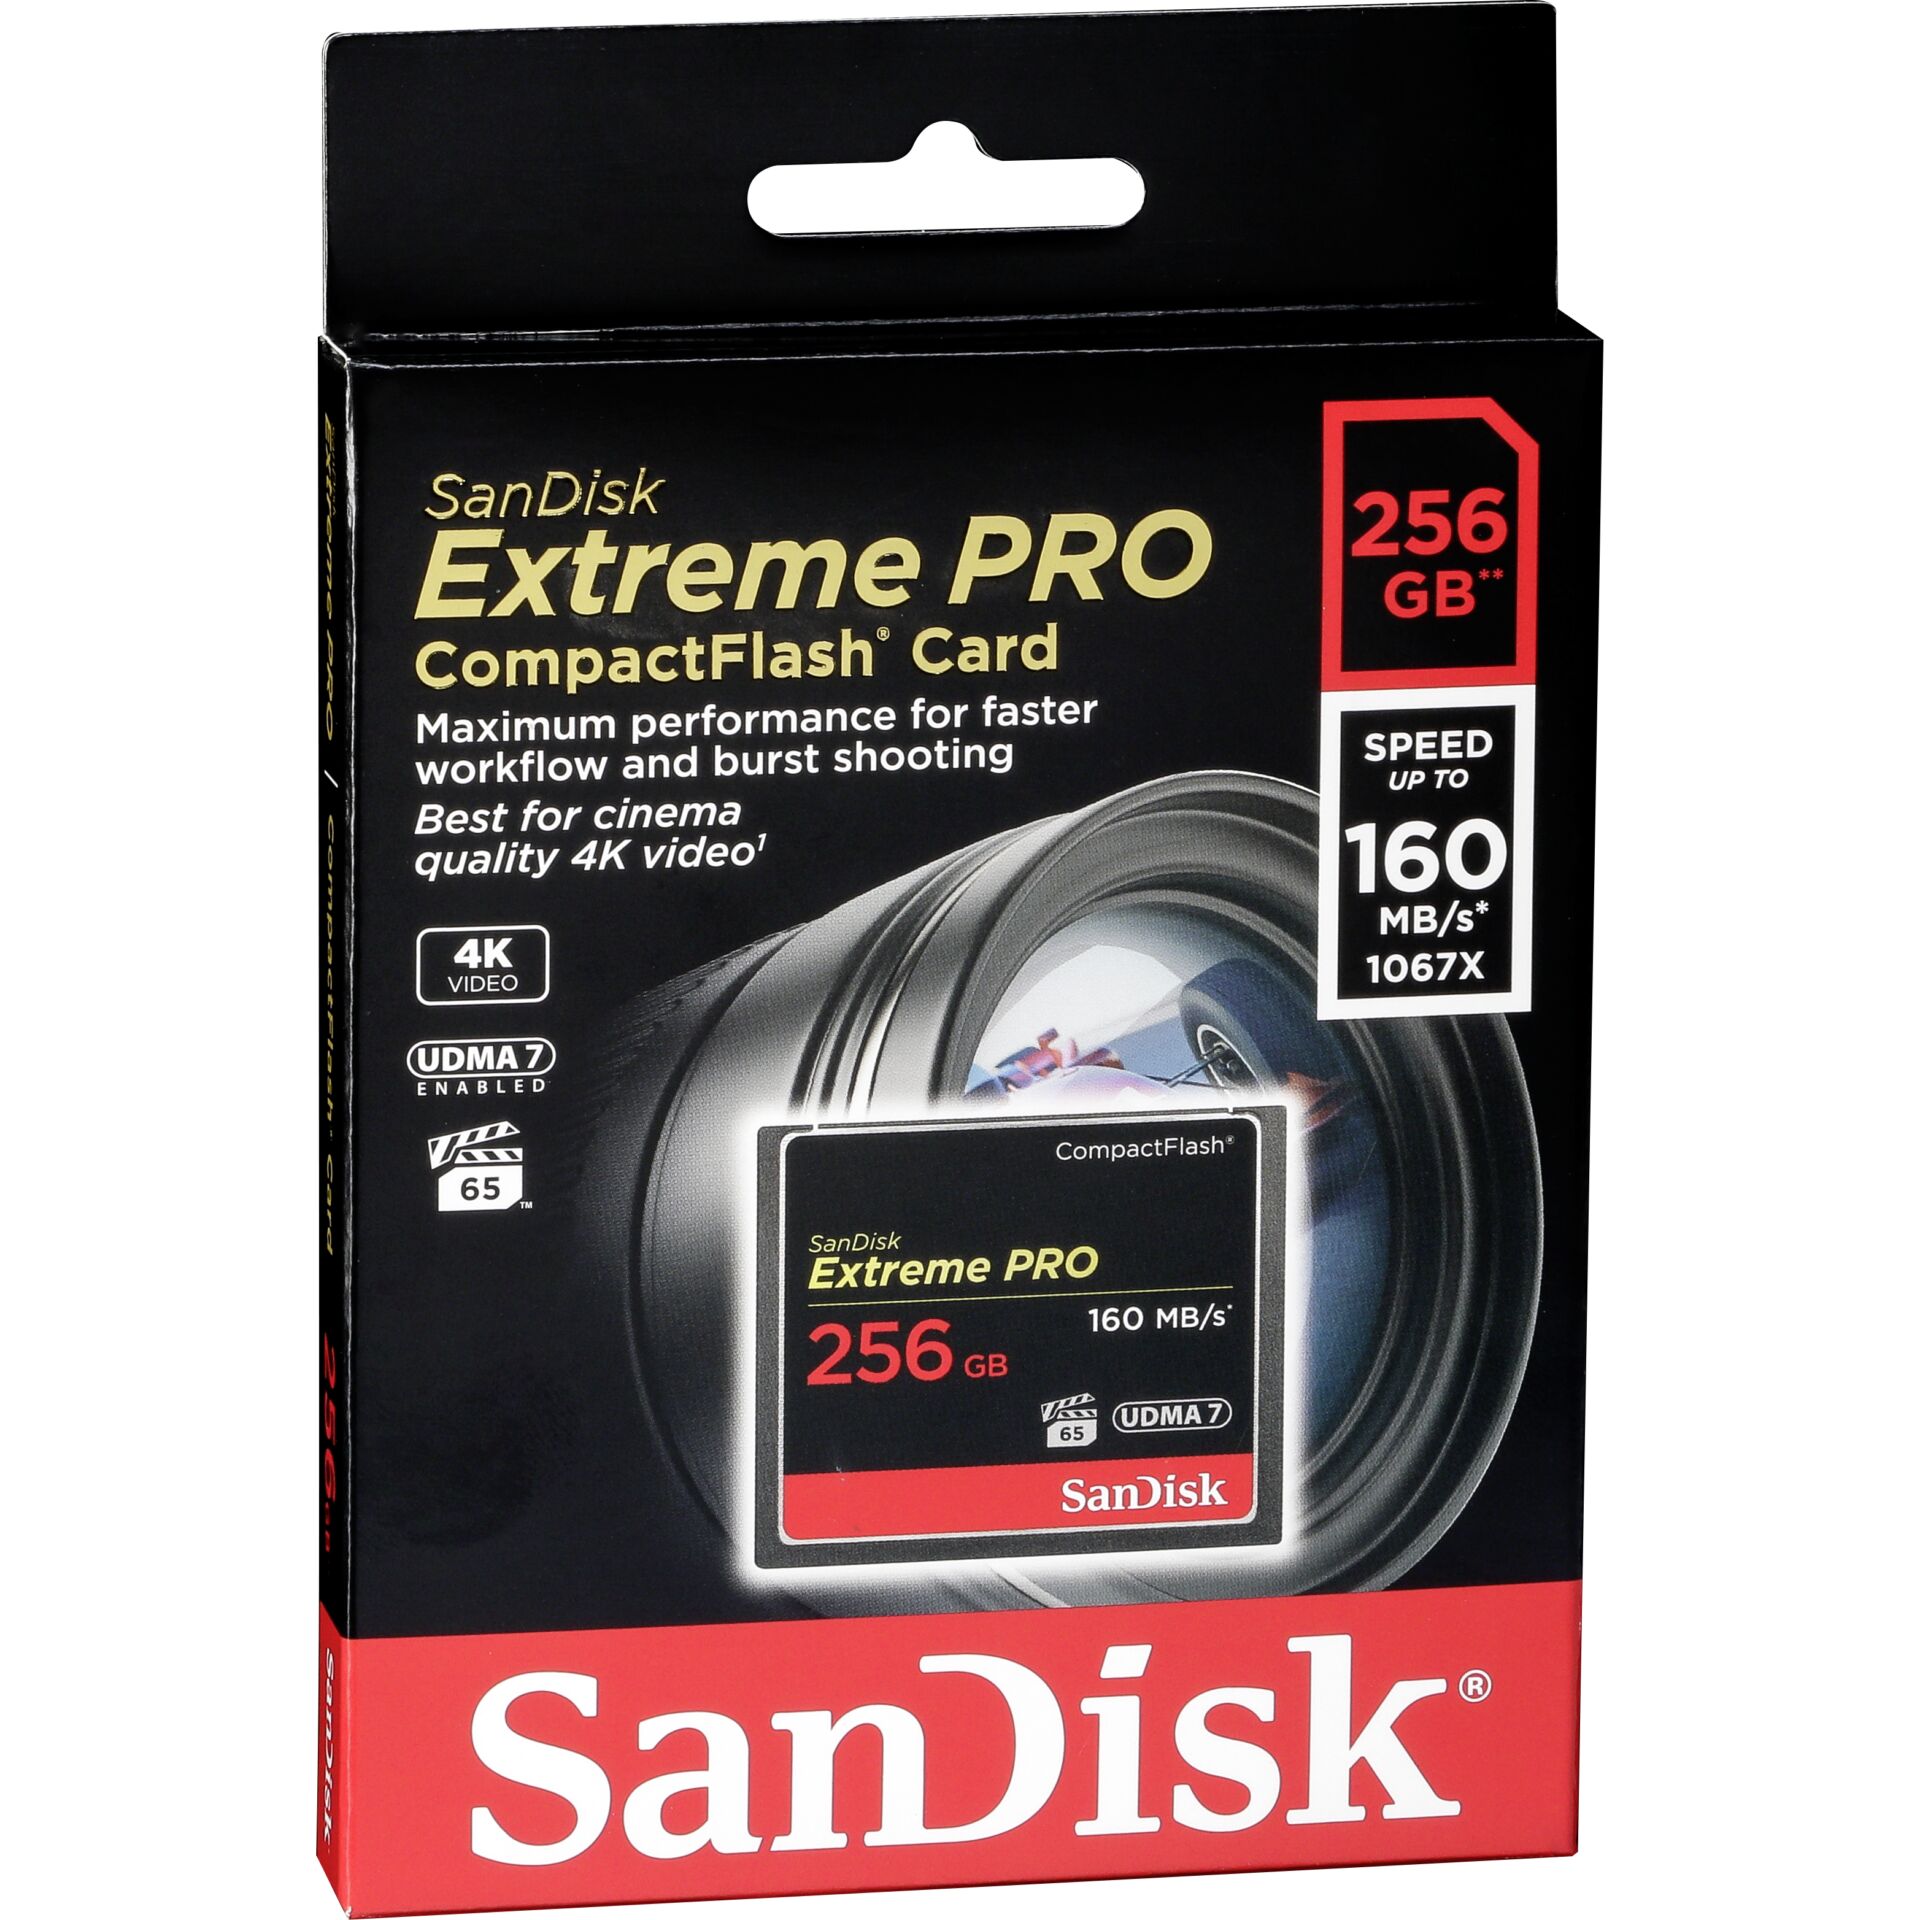 CompactFlash 256GB SanDisk Extreme Pro, 160MB/s 